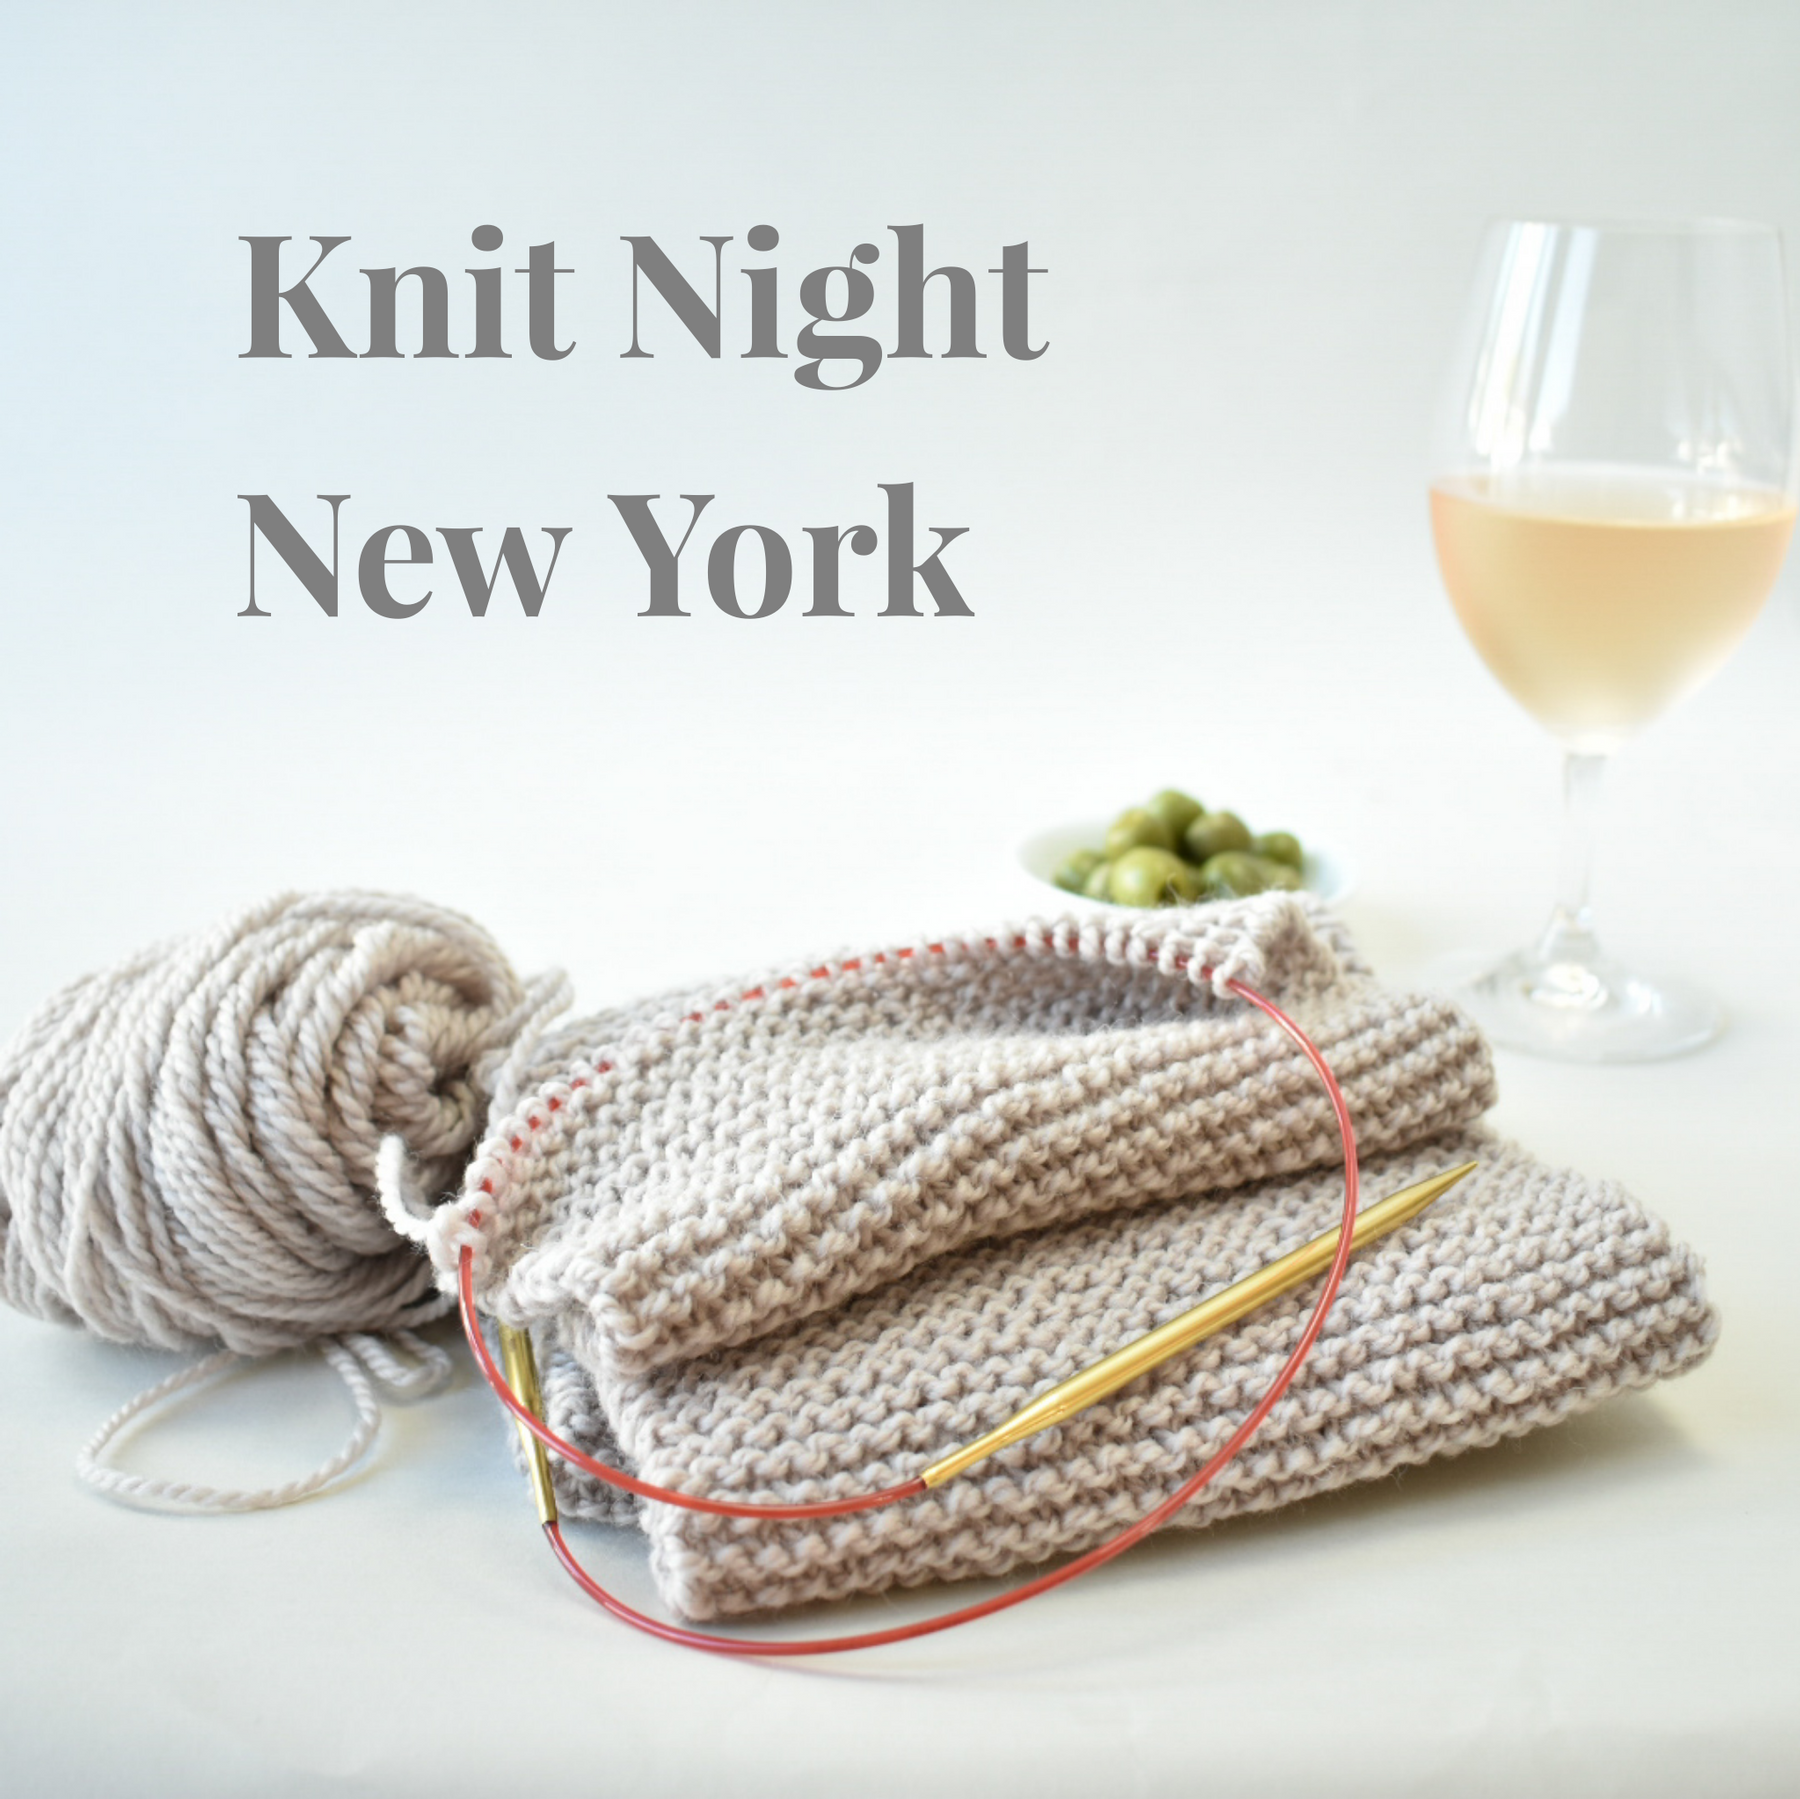 Knit Night NYC - June 11th